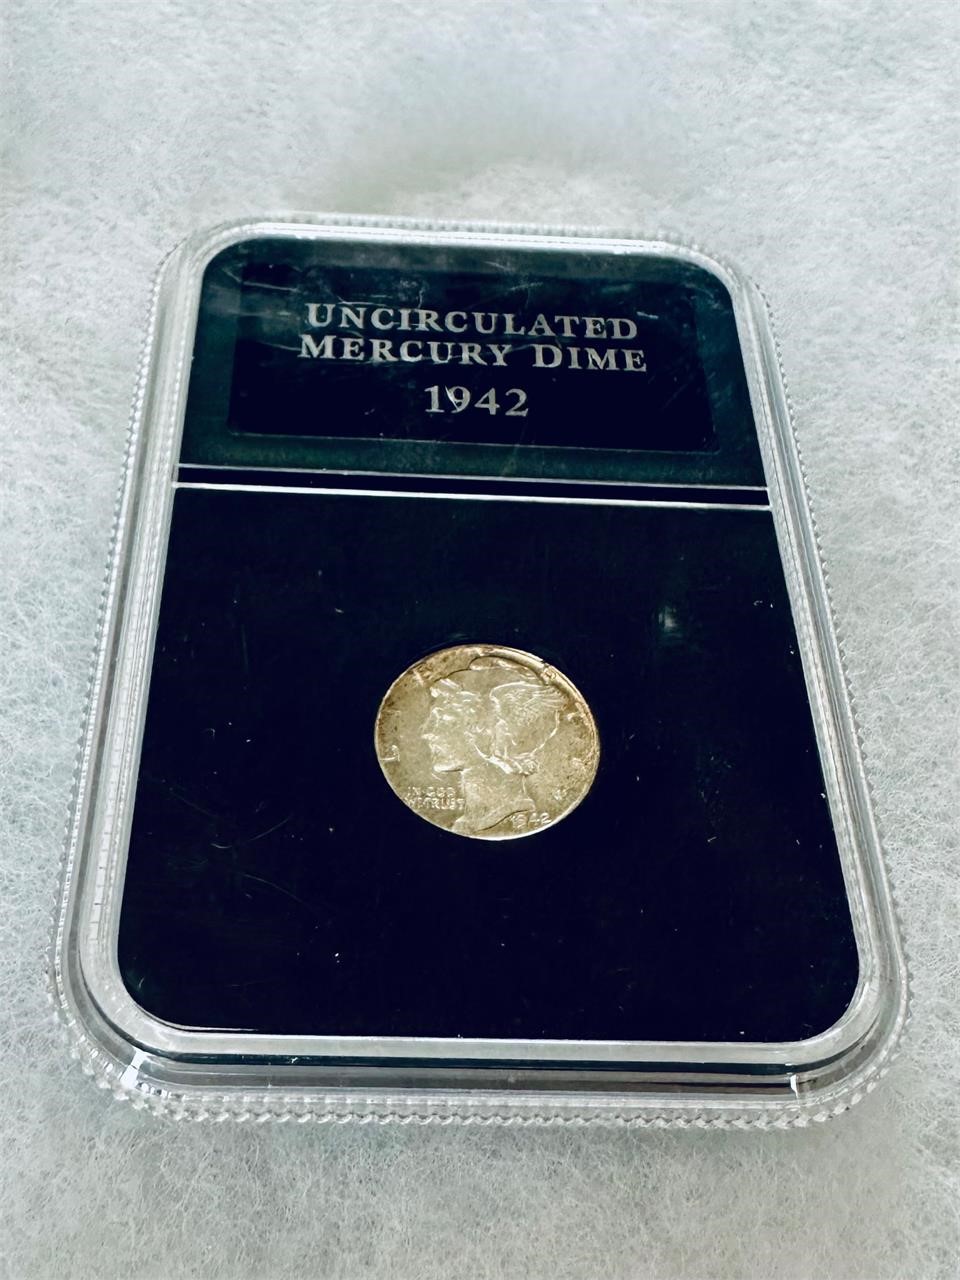 1942 uncirculated mercury dime